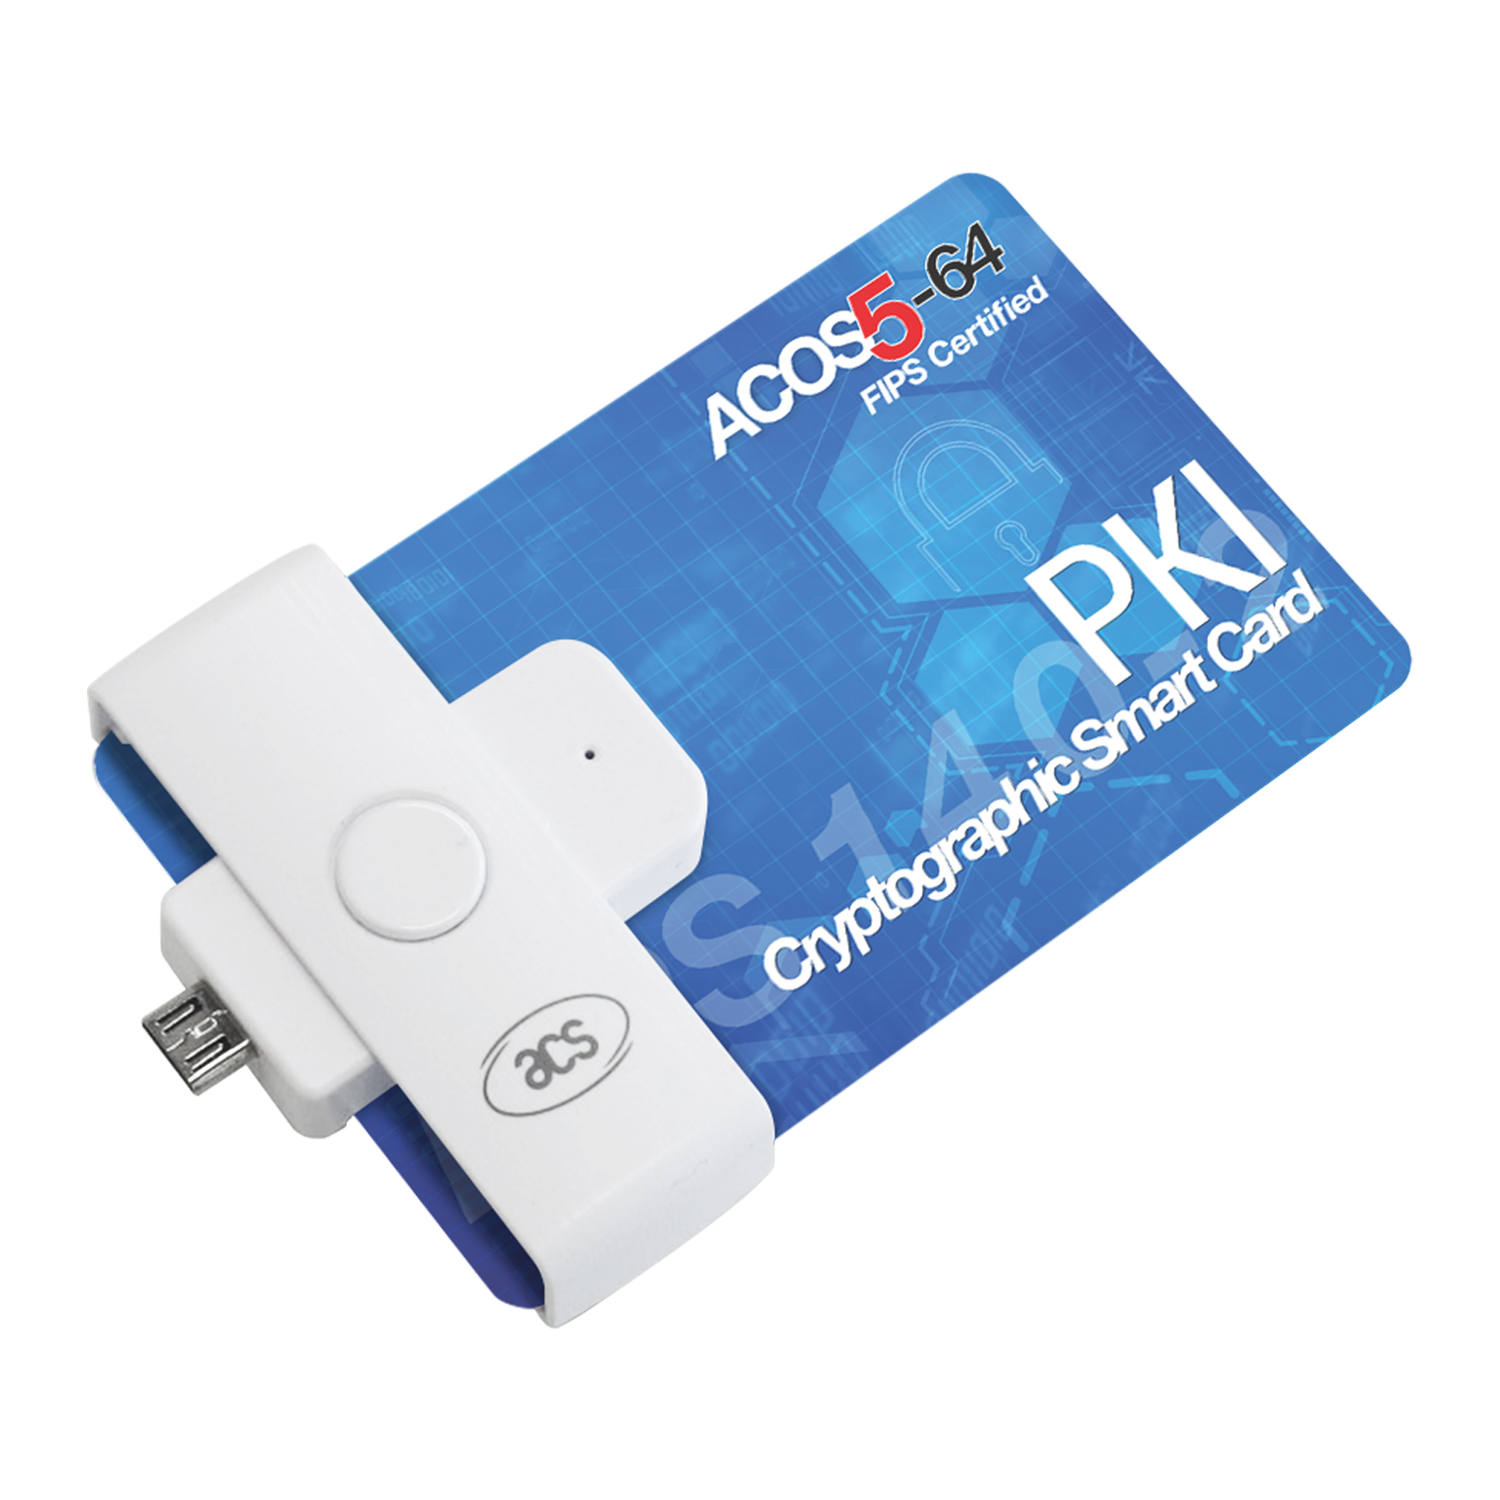 ACS ISO7816 EMV UnionPay Portable Contact Smart Card Reader For E-Payment ACR39U-ND